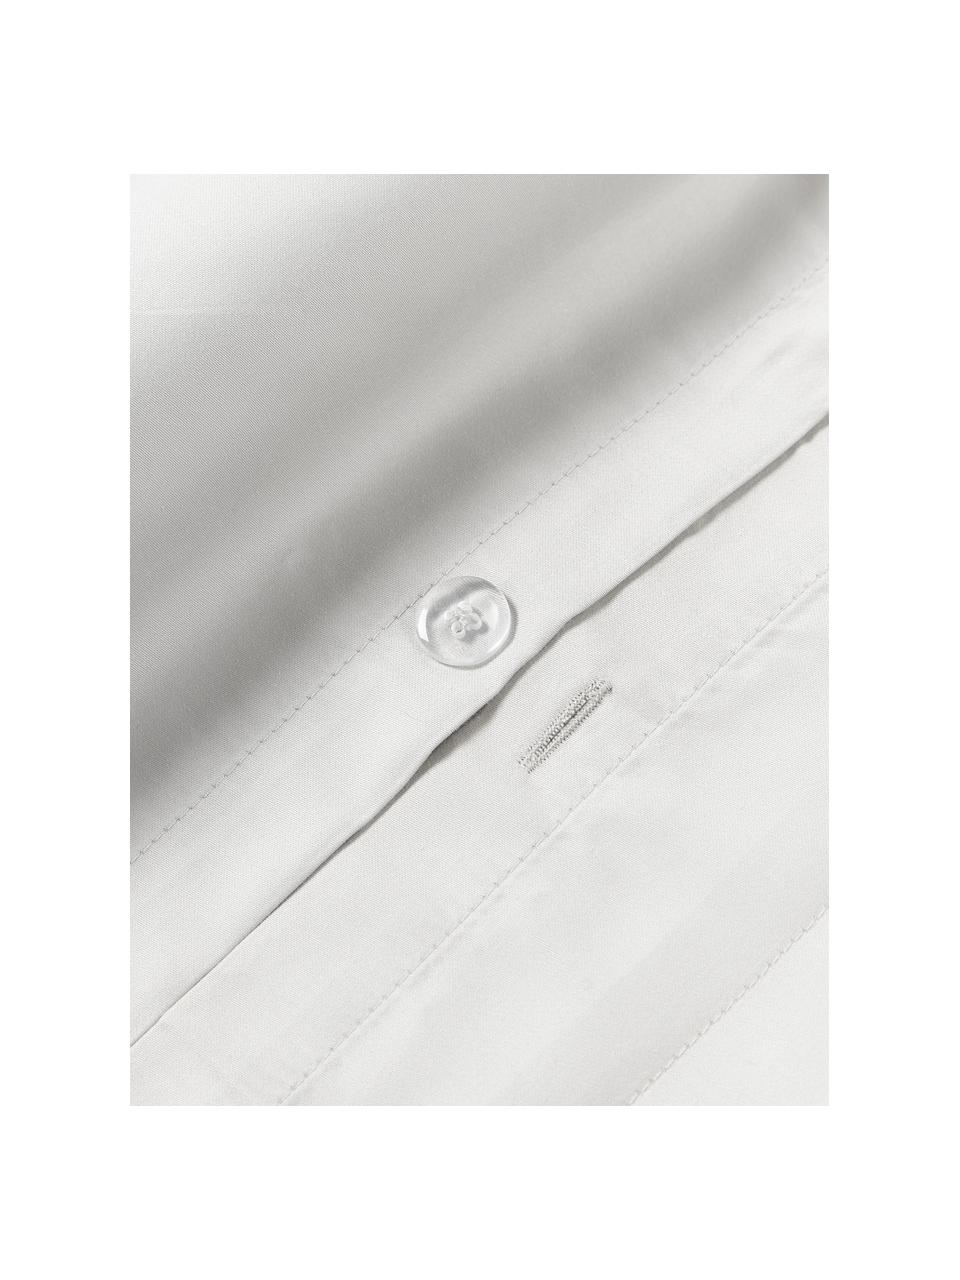 Taie d'oreiller en satin de coton Carlotta, Gris clair, blanc, larg. 50 x long. 70 cm